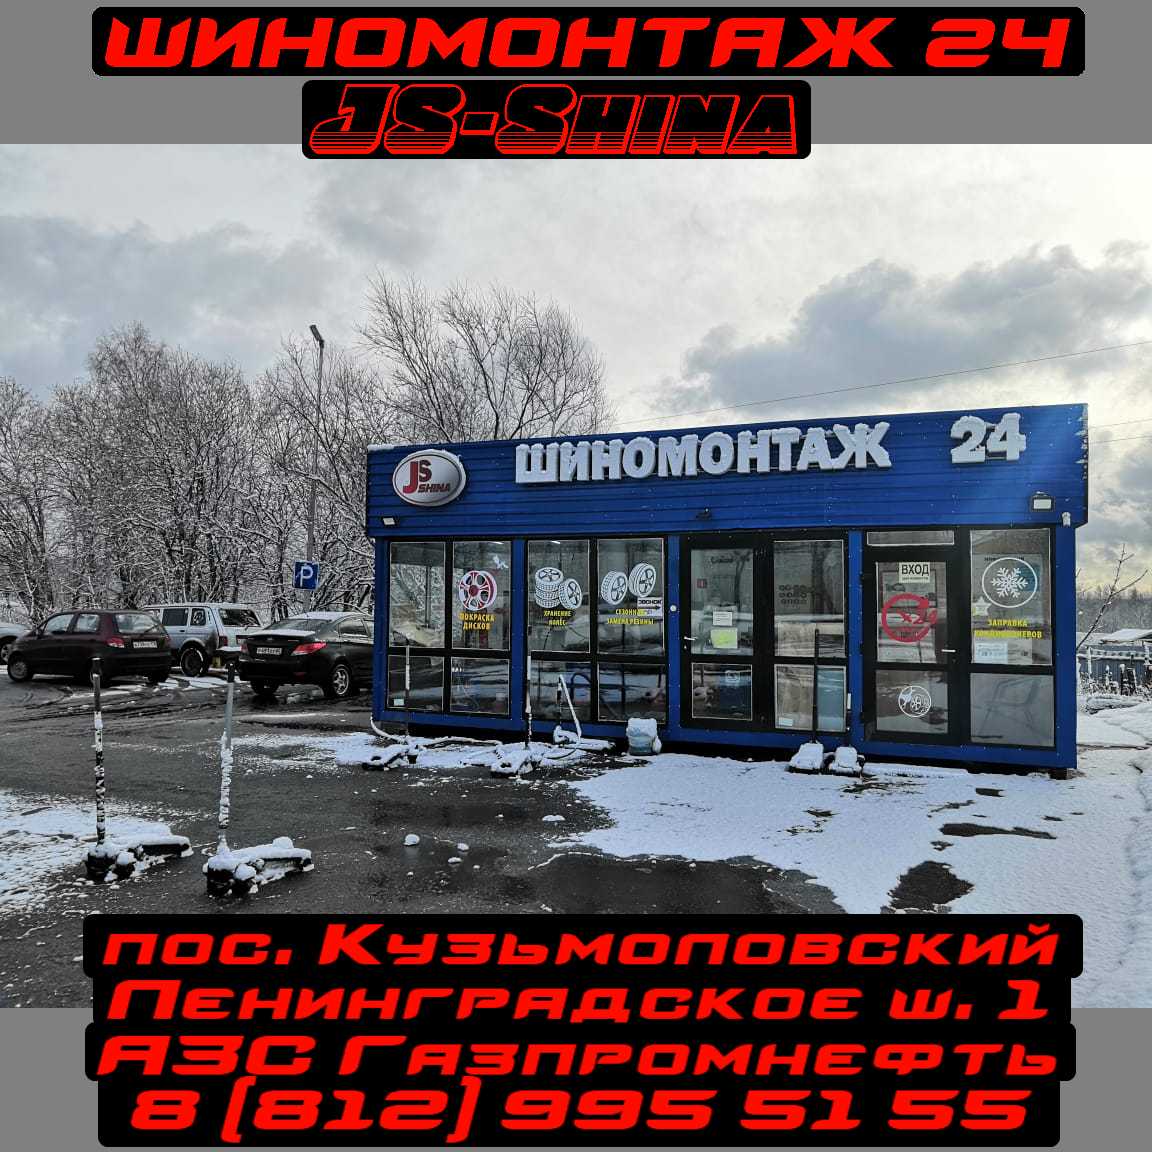 Шиномонтаж 24 часа пос. Кузьмоловский, Ленинградское ш. 1 АЗС Газпромнефть